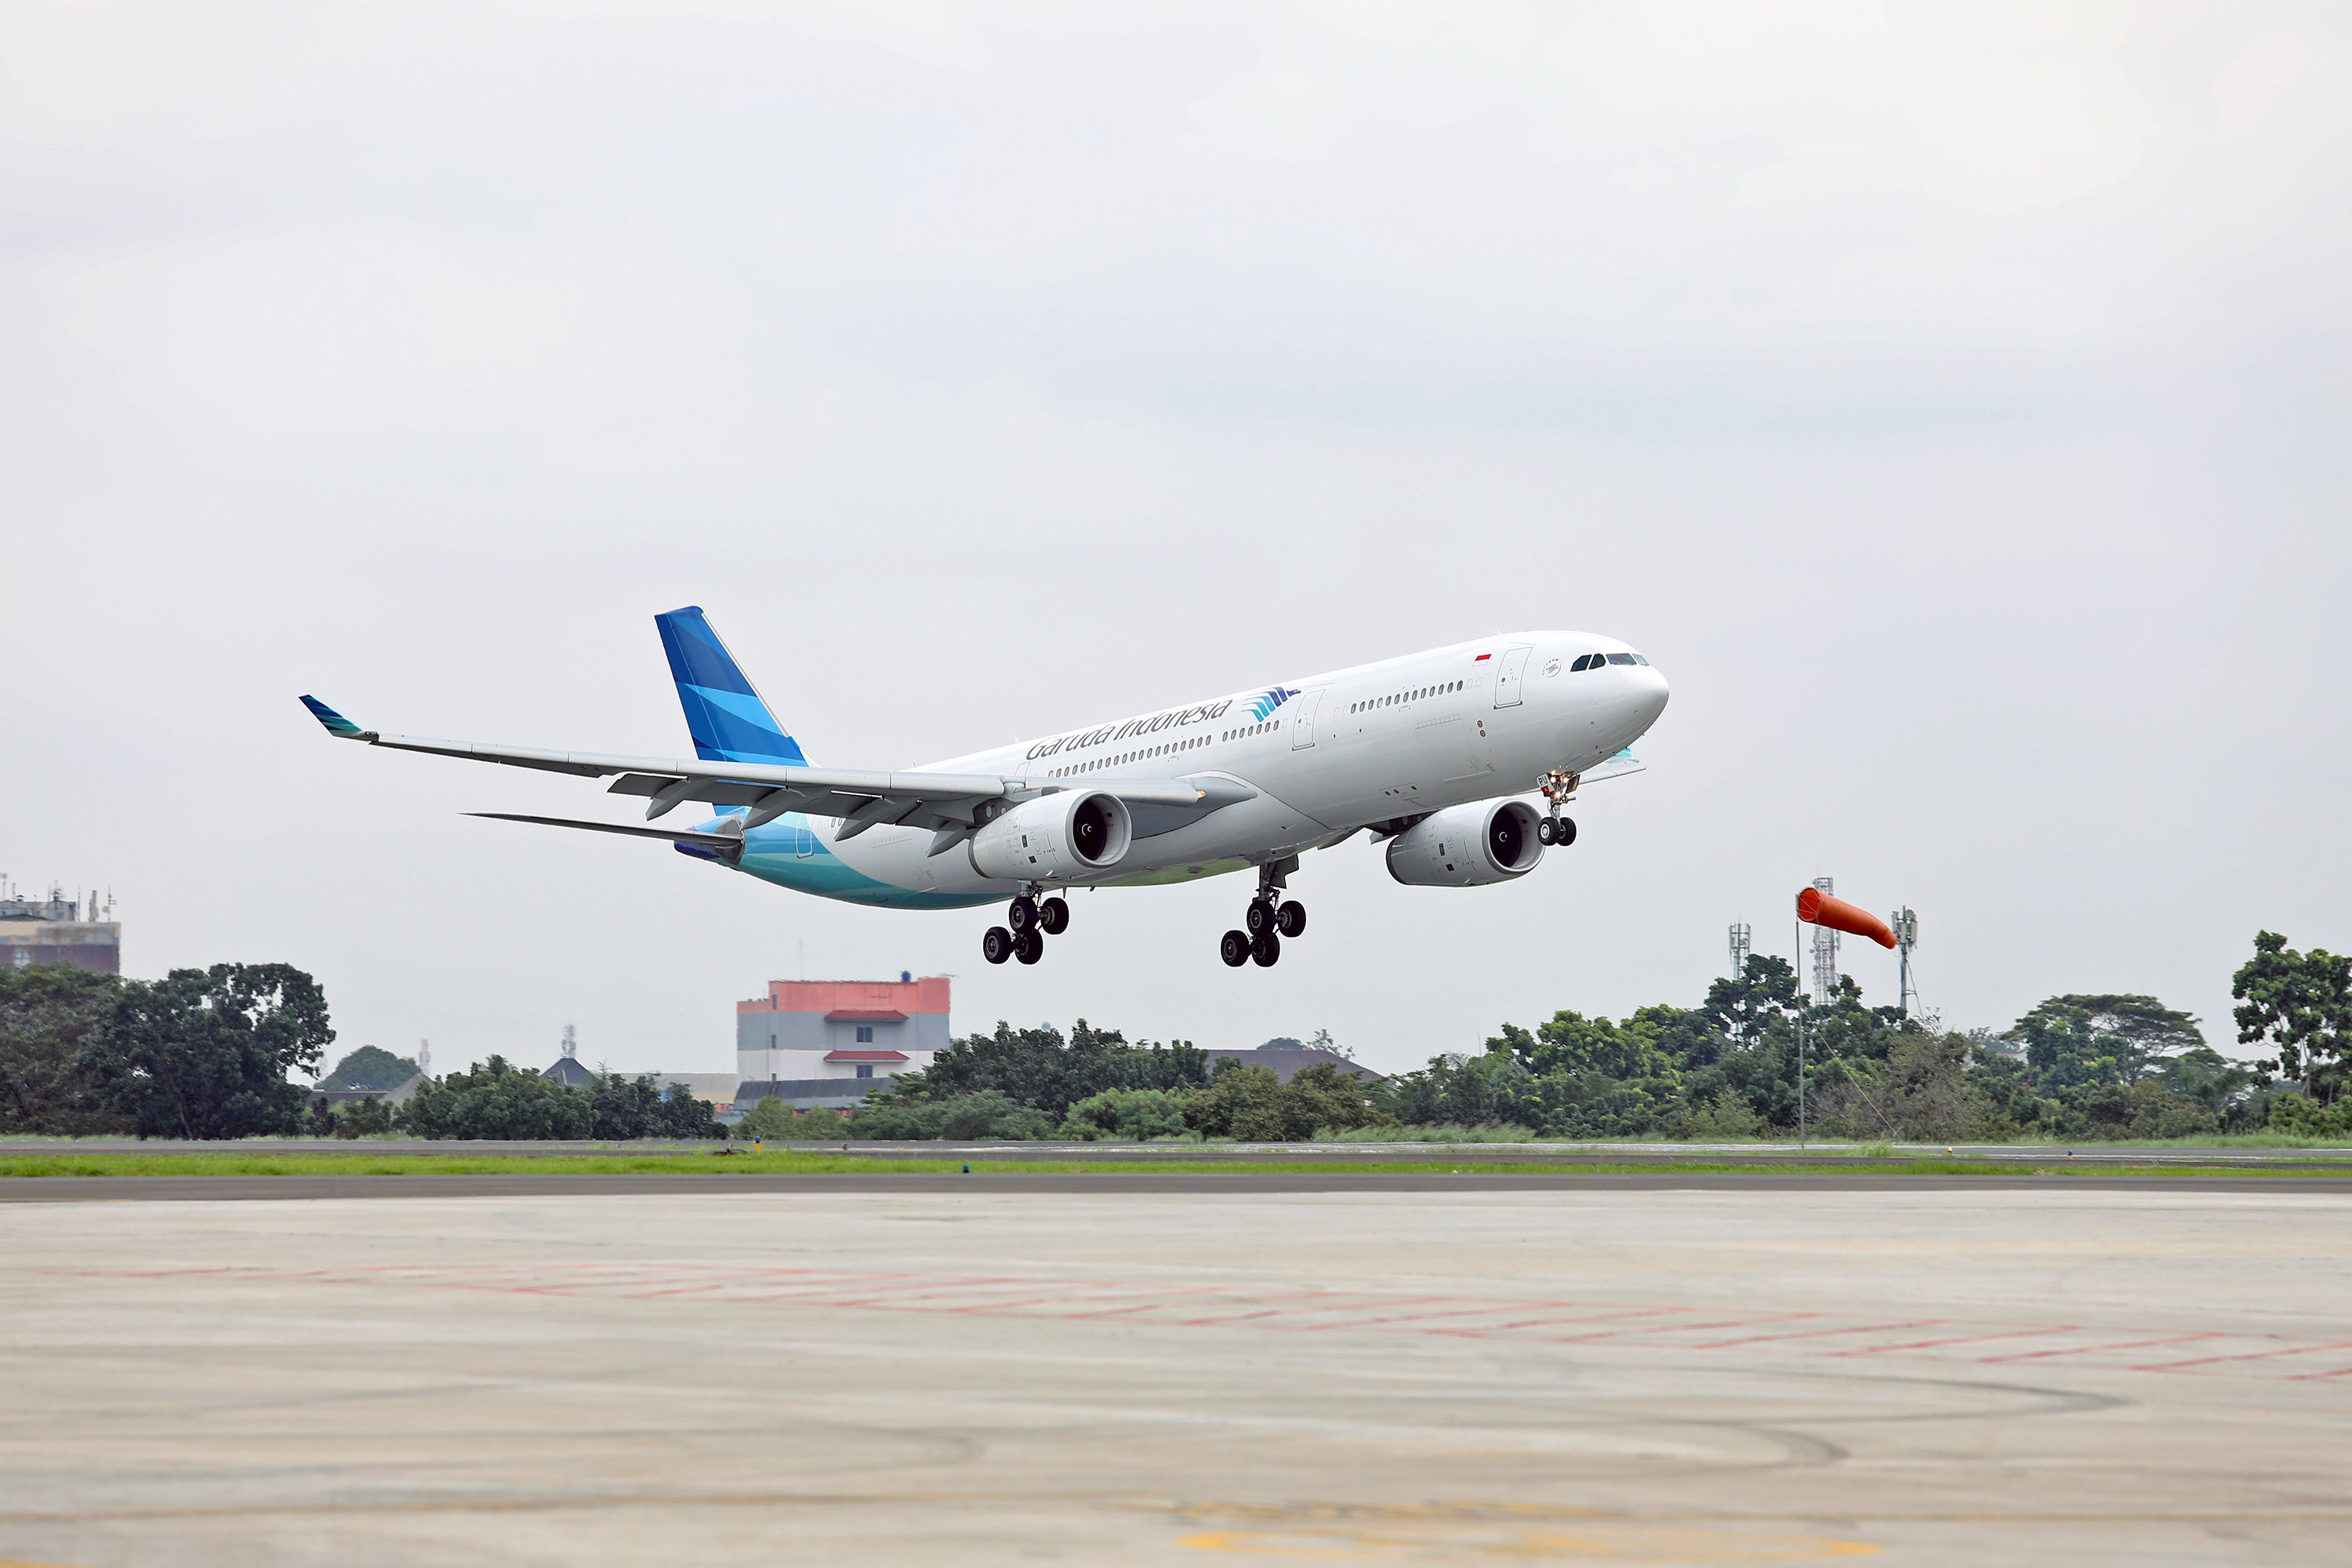 Pesawat Airbus A330-343 milik Garuda Indonesia dengan nomor penerbangan GA 7990 yang membawa Menko PMK Muhadjir Effendy, Kepala BNPB Letjen TNI Suharyanto S.Sos., M.M., bersama rombongan delegasi Indonesia dan tim kemanusiaan untuk Turkiye mendarat di Lanud Halim Perdanakusuma, Jakarta, Jumat (24/2).